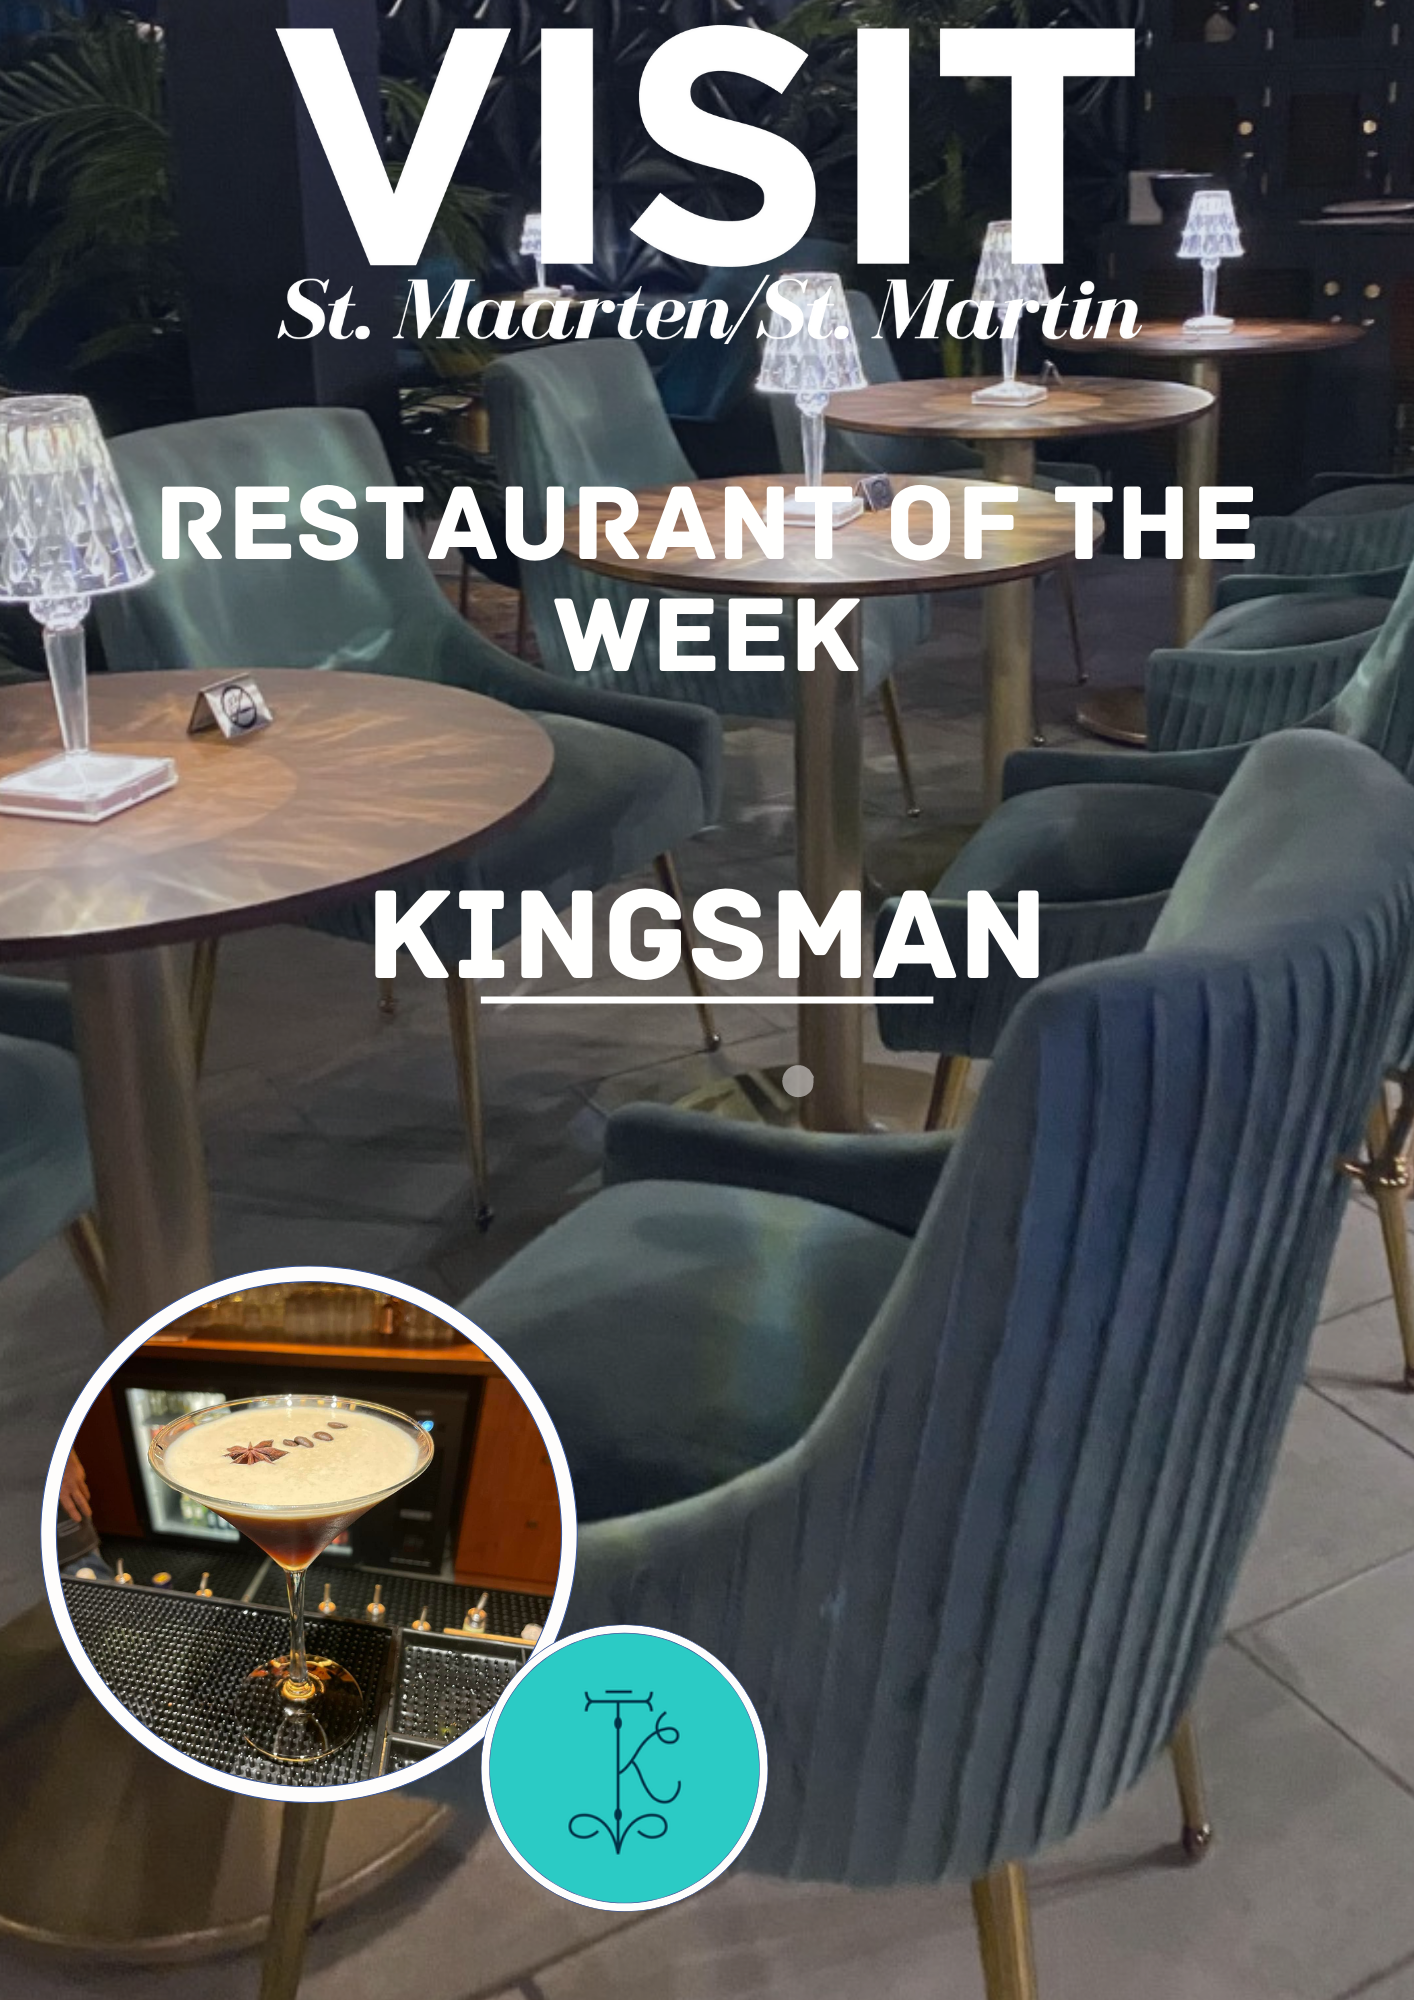 Kingsman Lounge for restaurant of the week.